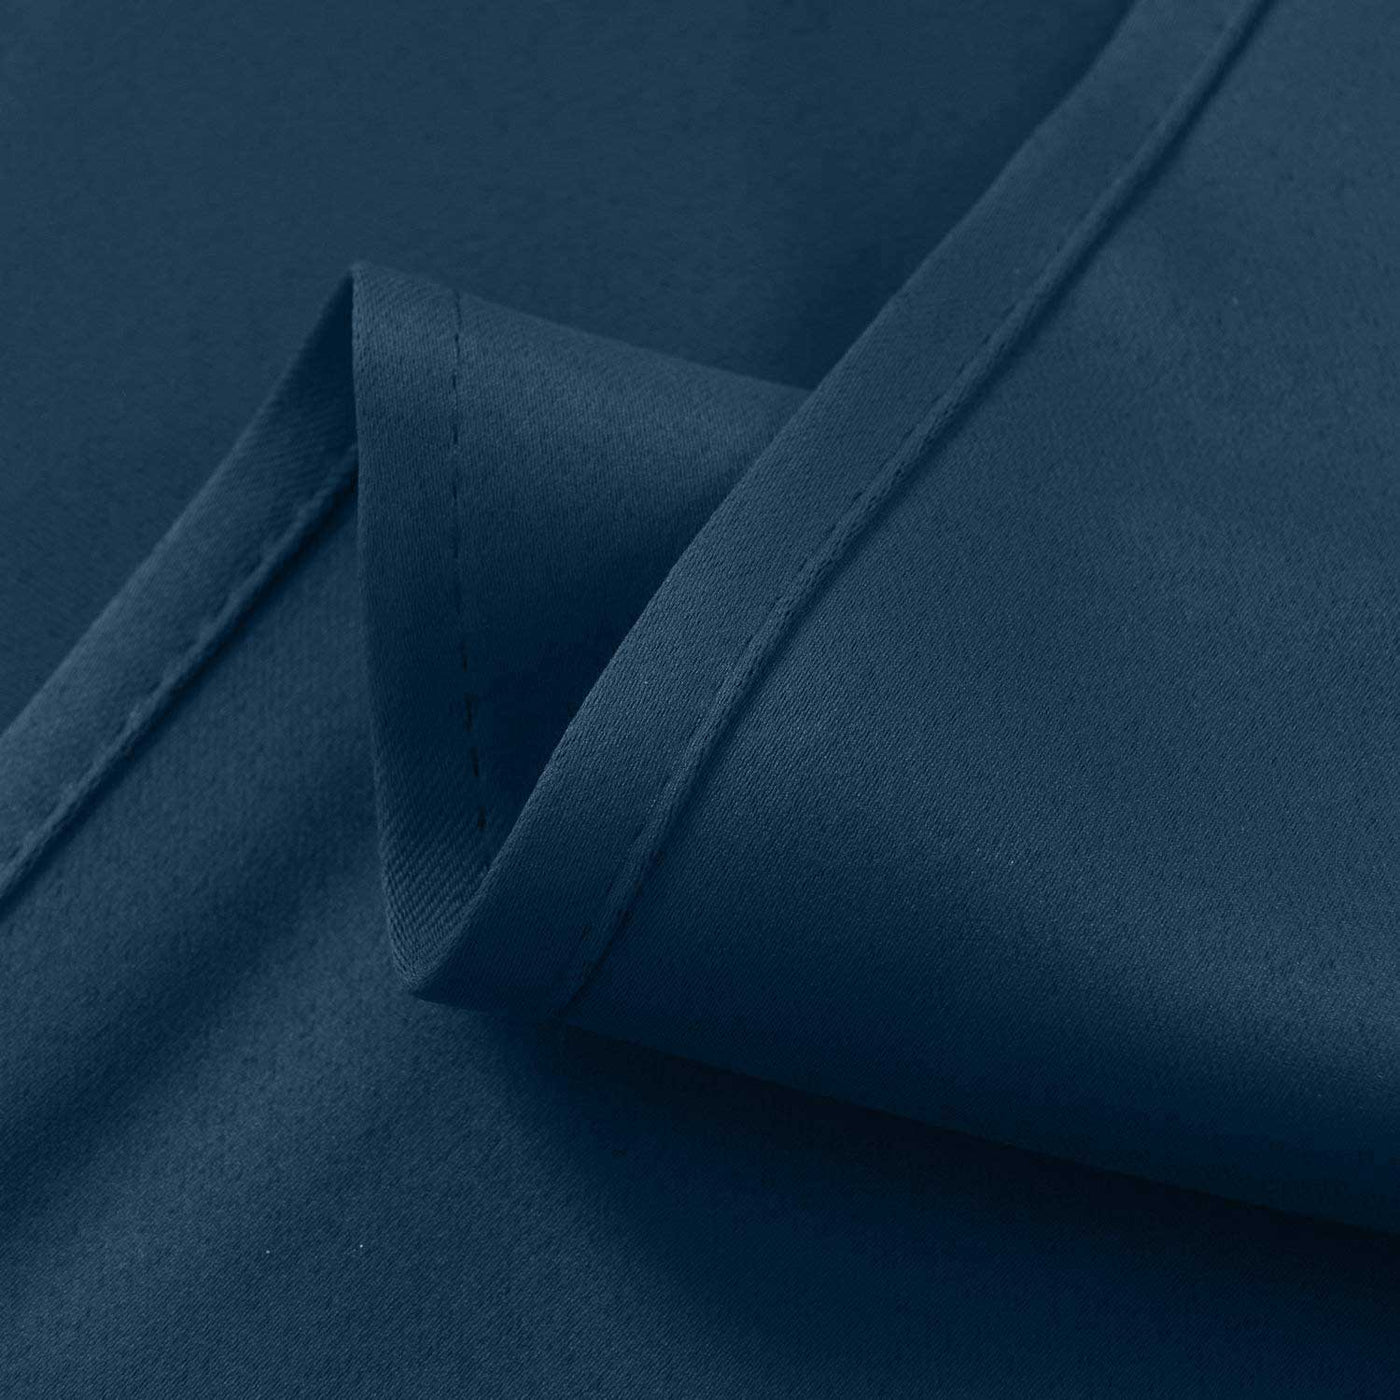 Goblet Pleat Curtain 1 Piece - Navy Blue